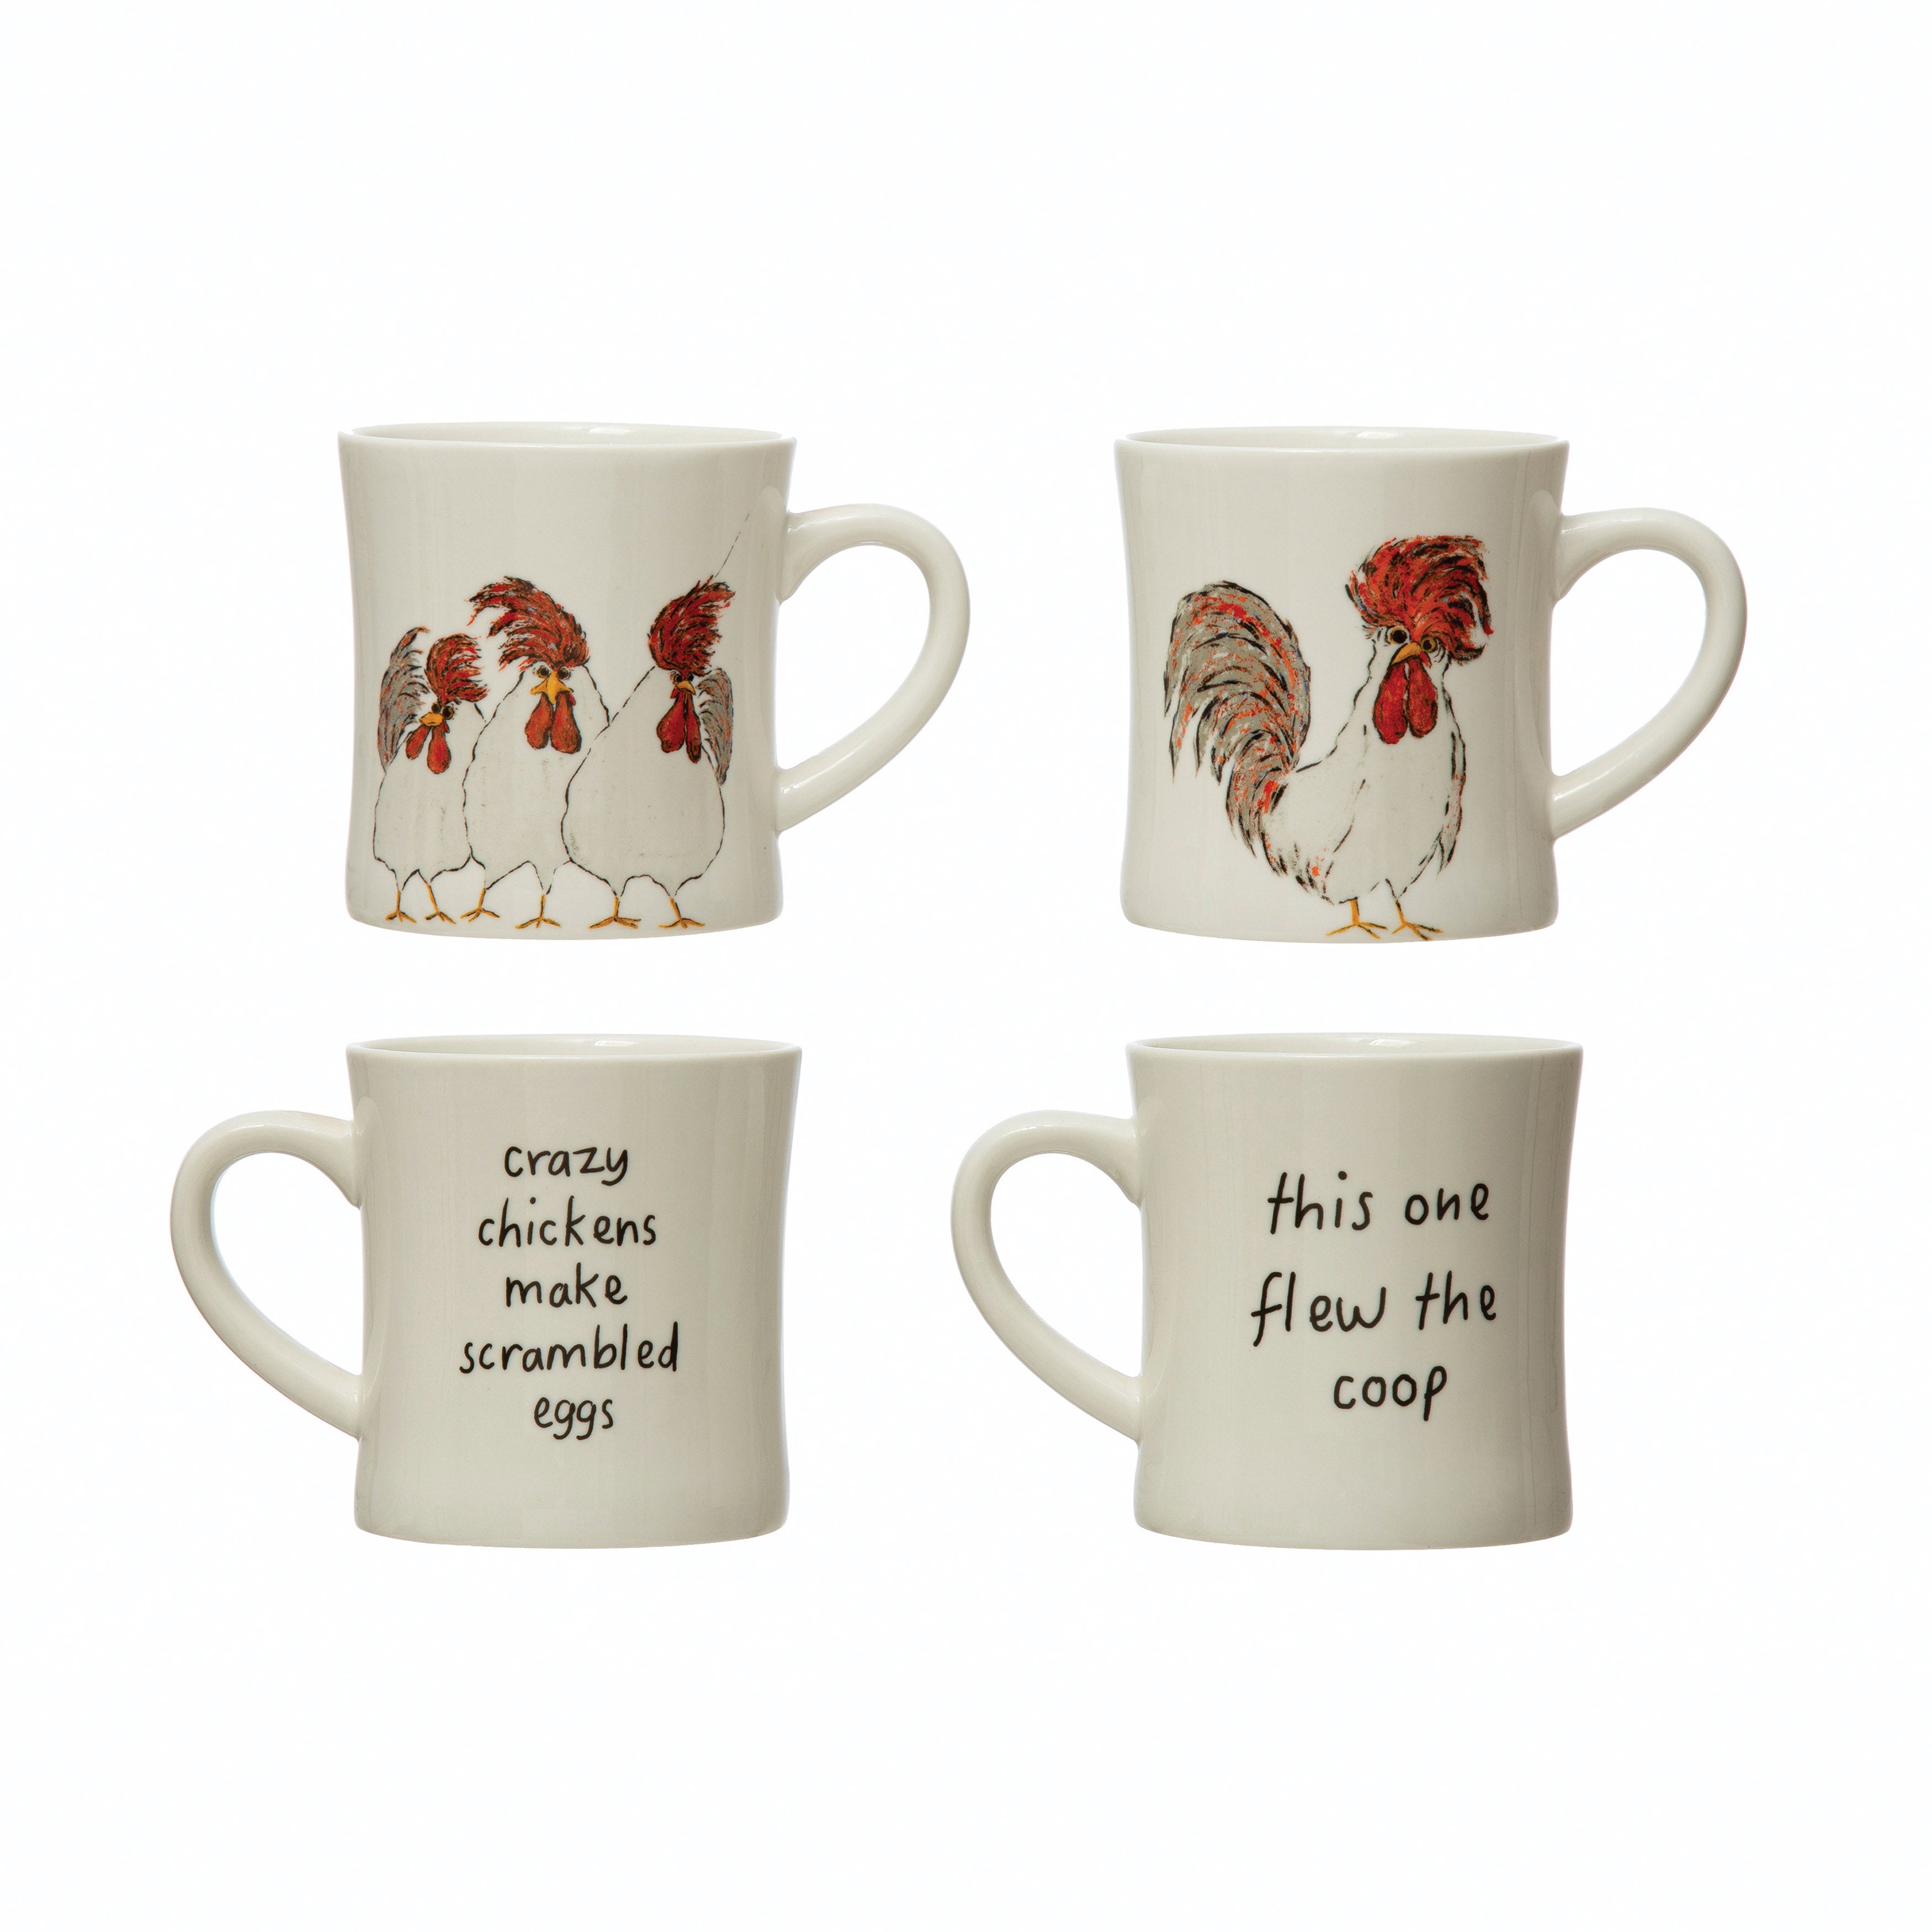 Mugs  -  2 pack of Stoneware Mug w/ Chicken and saying